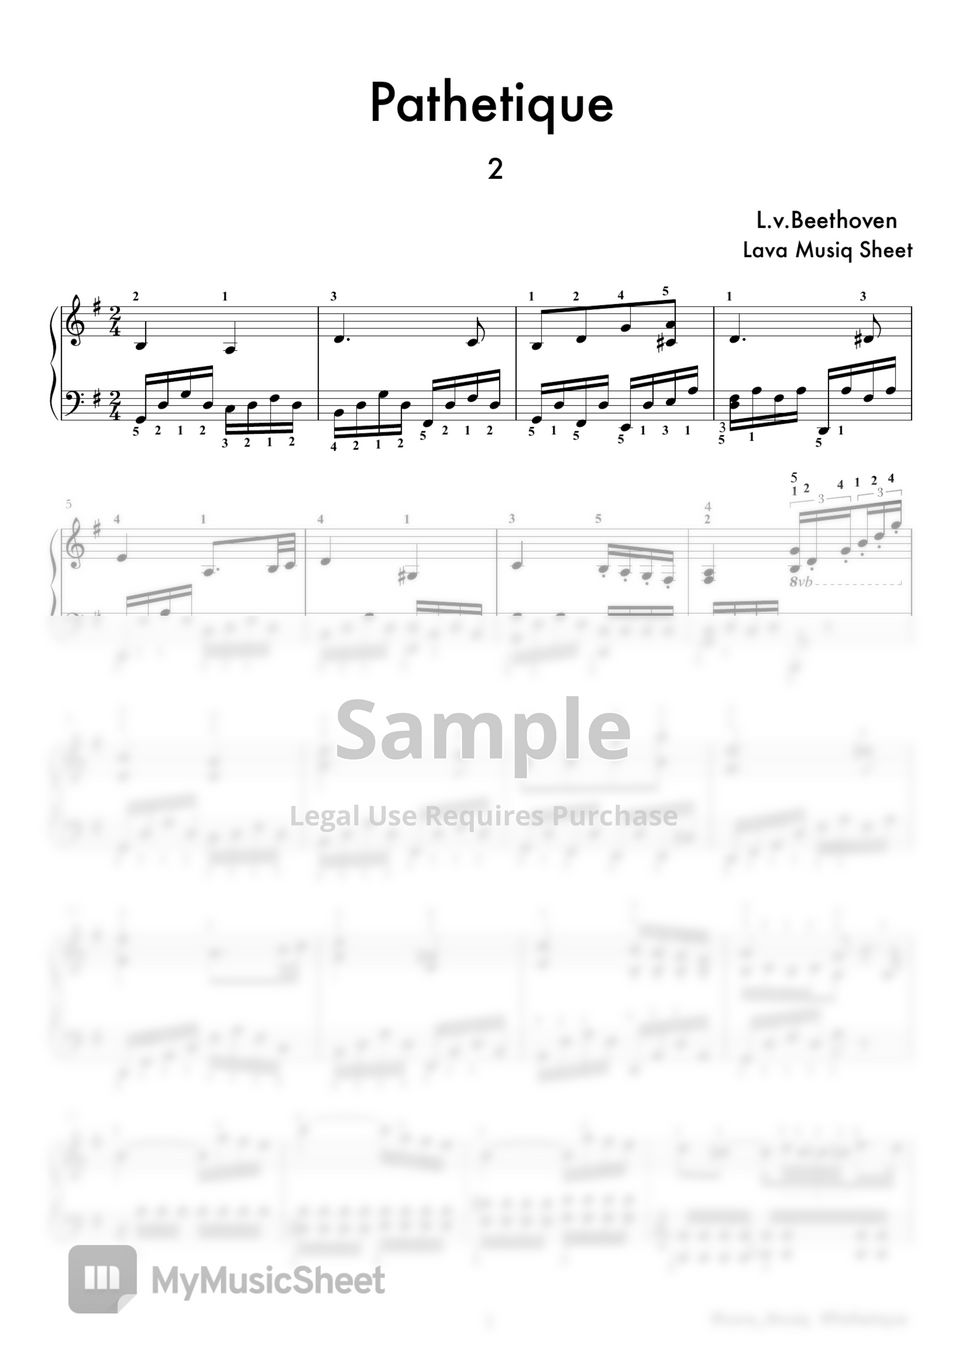 L.v.Beethoven - Pathetique (Easy Ver.) by Lava